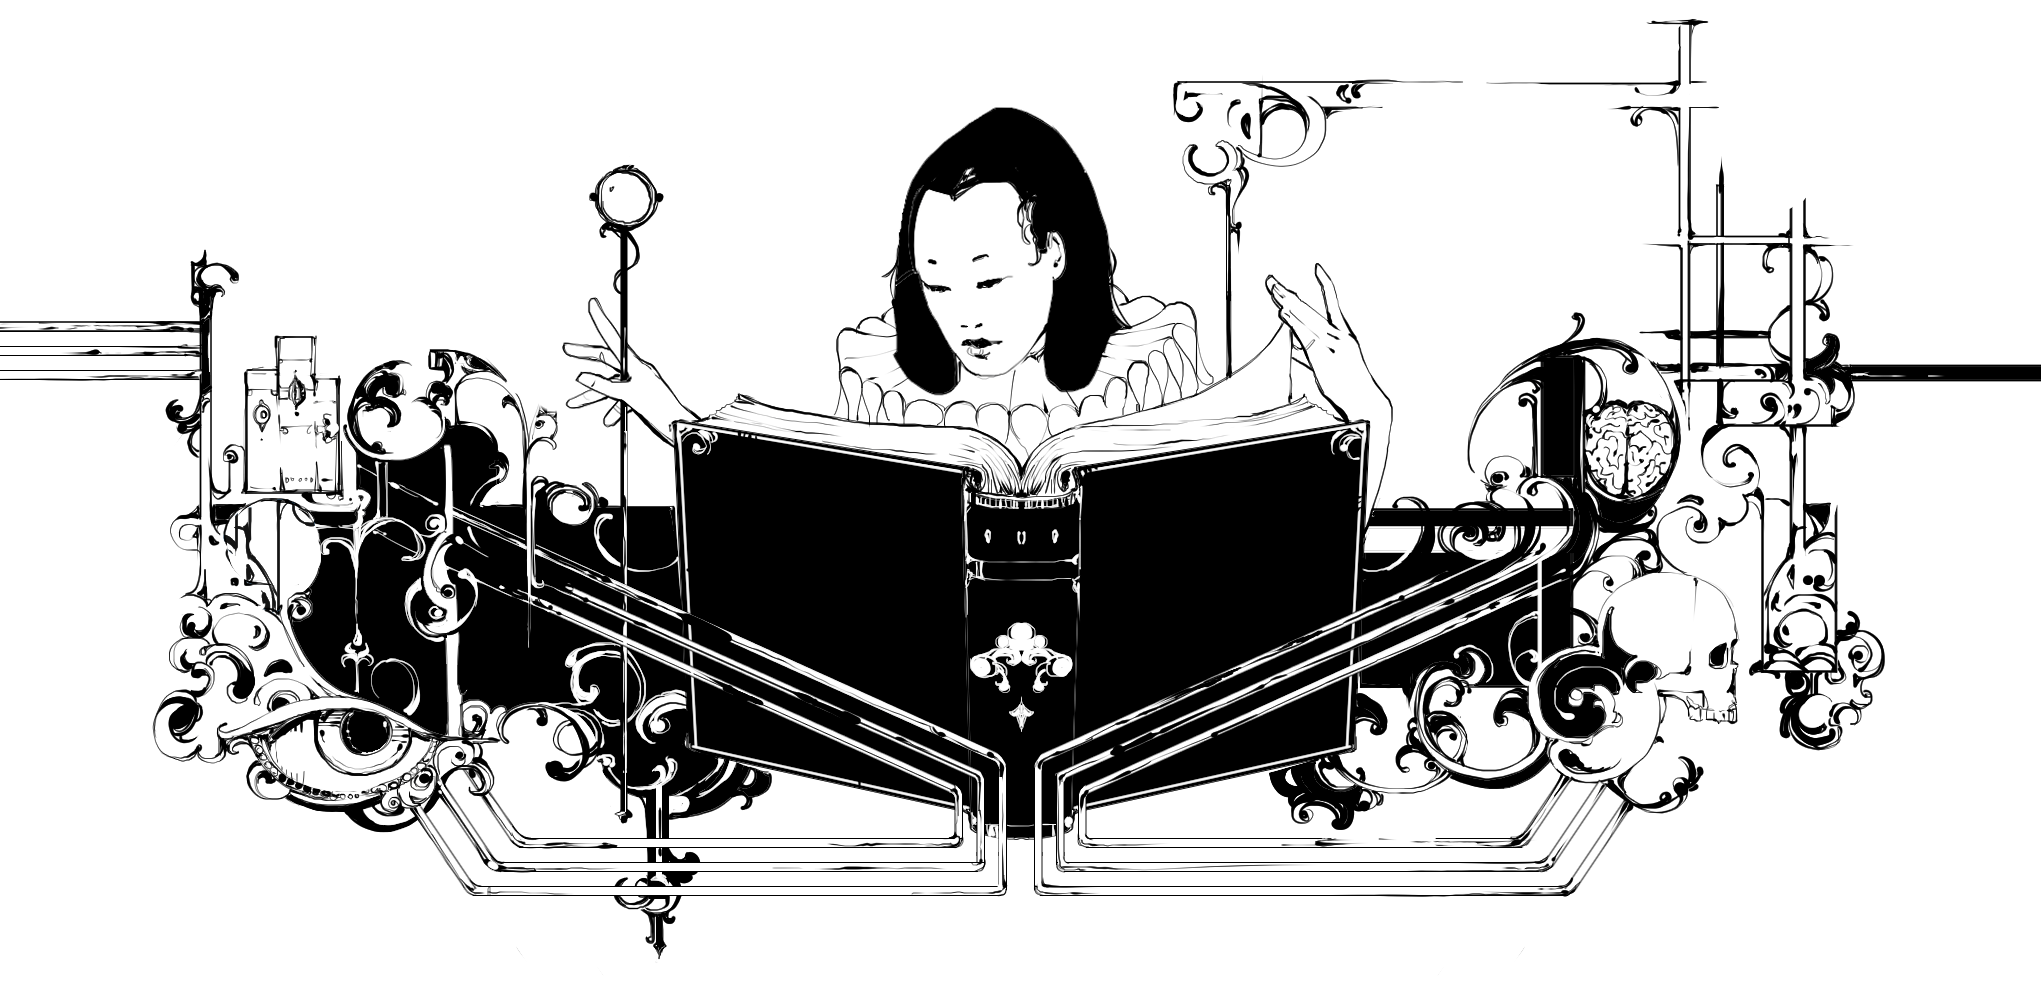 A female magic-user examining a book with arcane paraphernalia around her